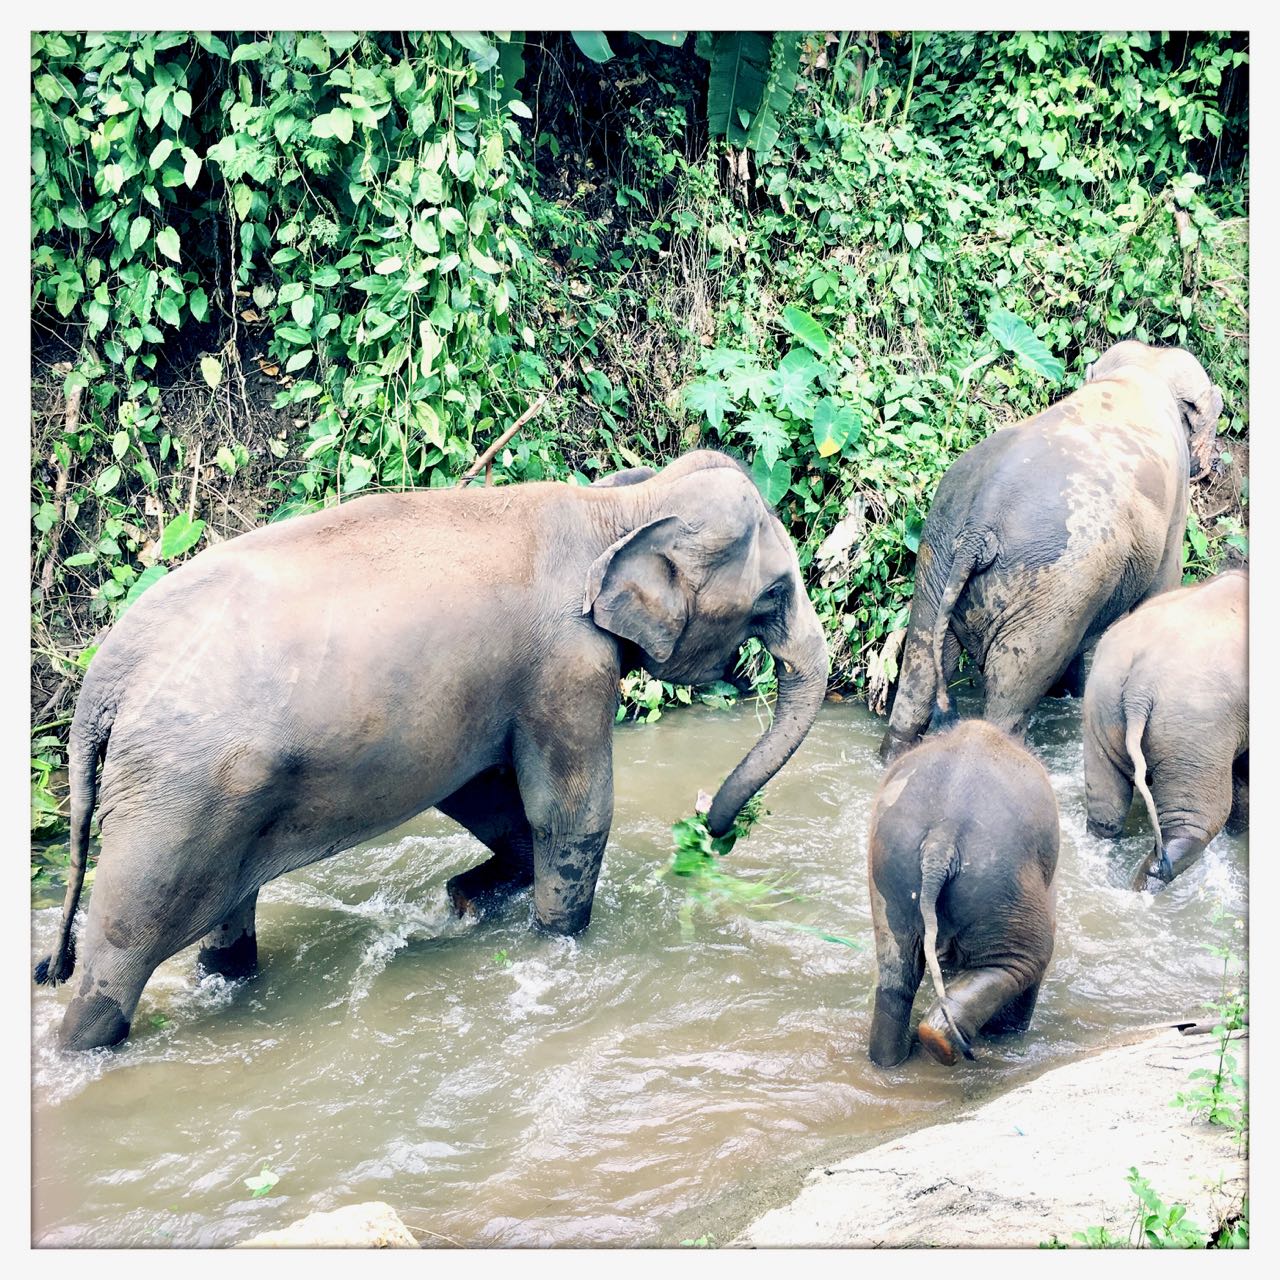 Elephants, bananas and mud!